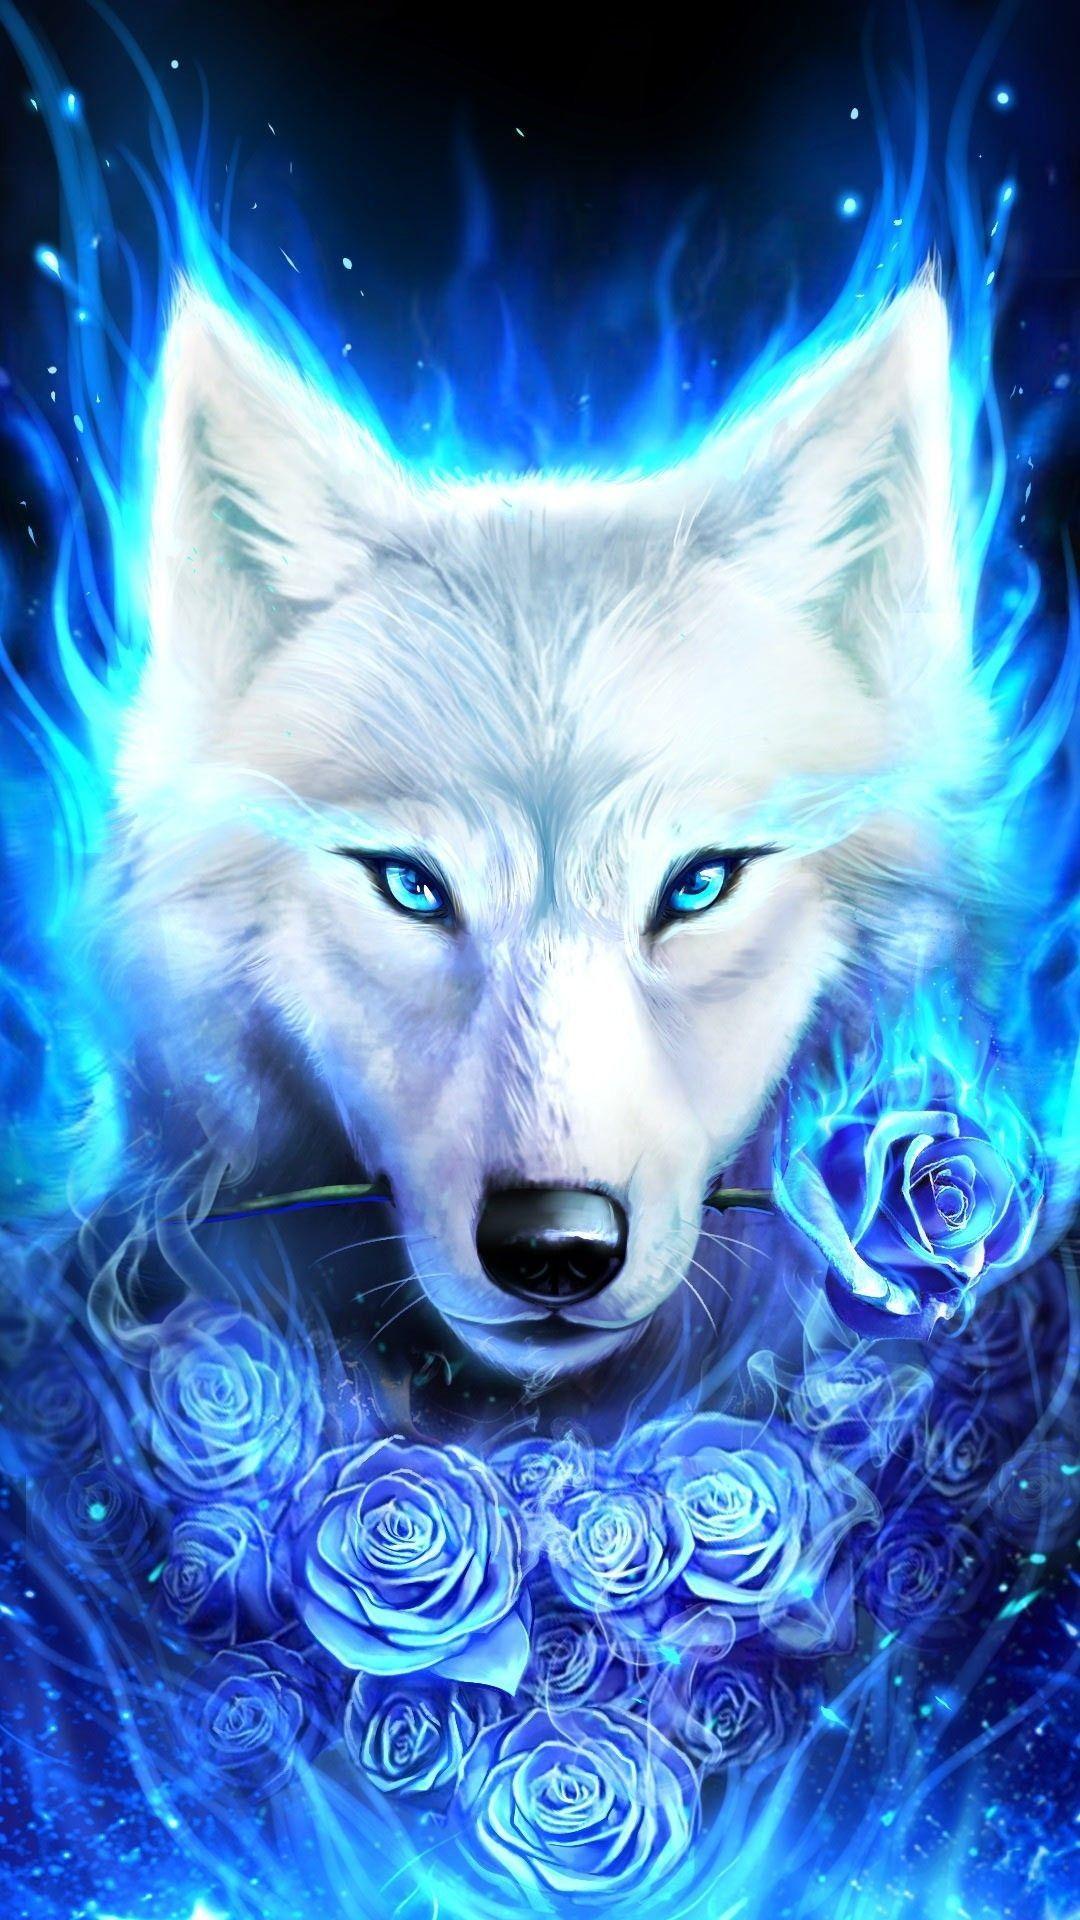 Ice Wolf Wallpaper. Wolf spirit animal, Fantasy wolf, Wolf painting